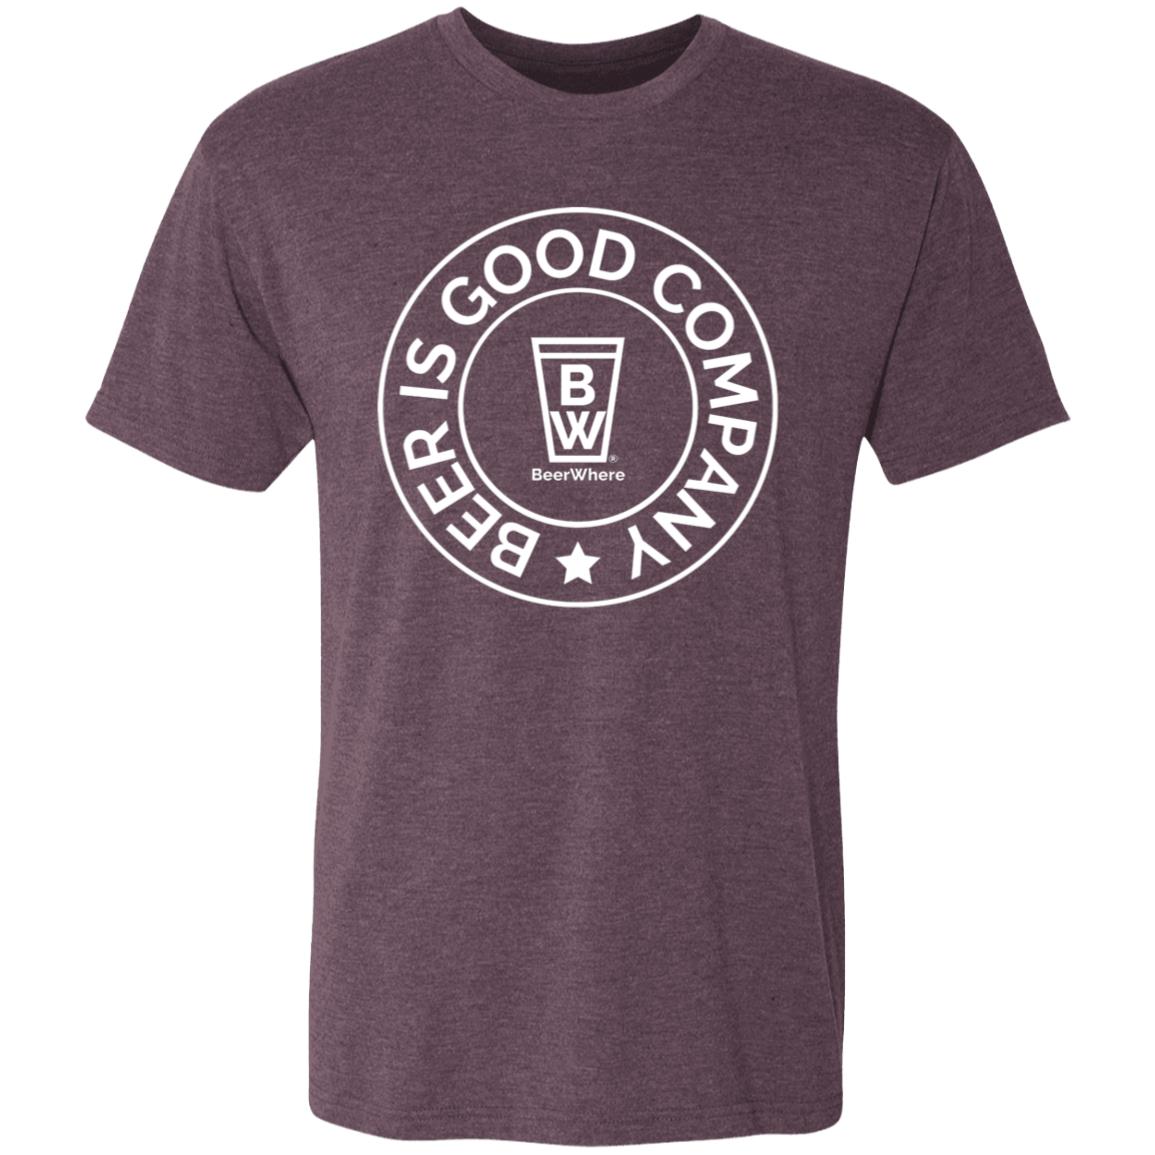 Good Company Men's Triblend T-Shirt